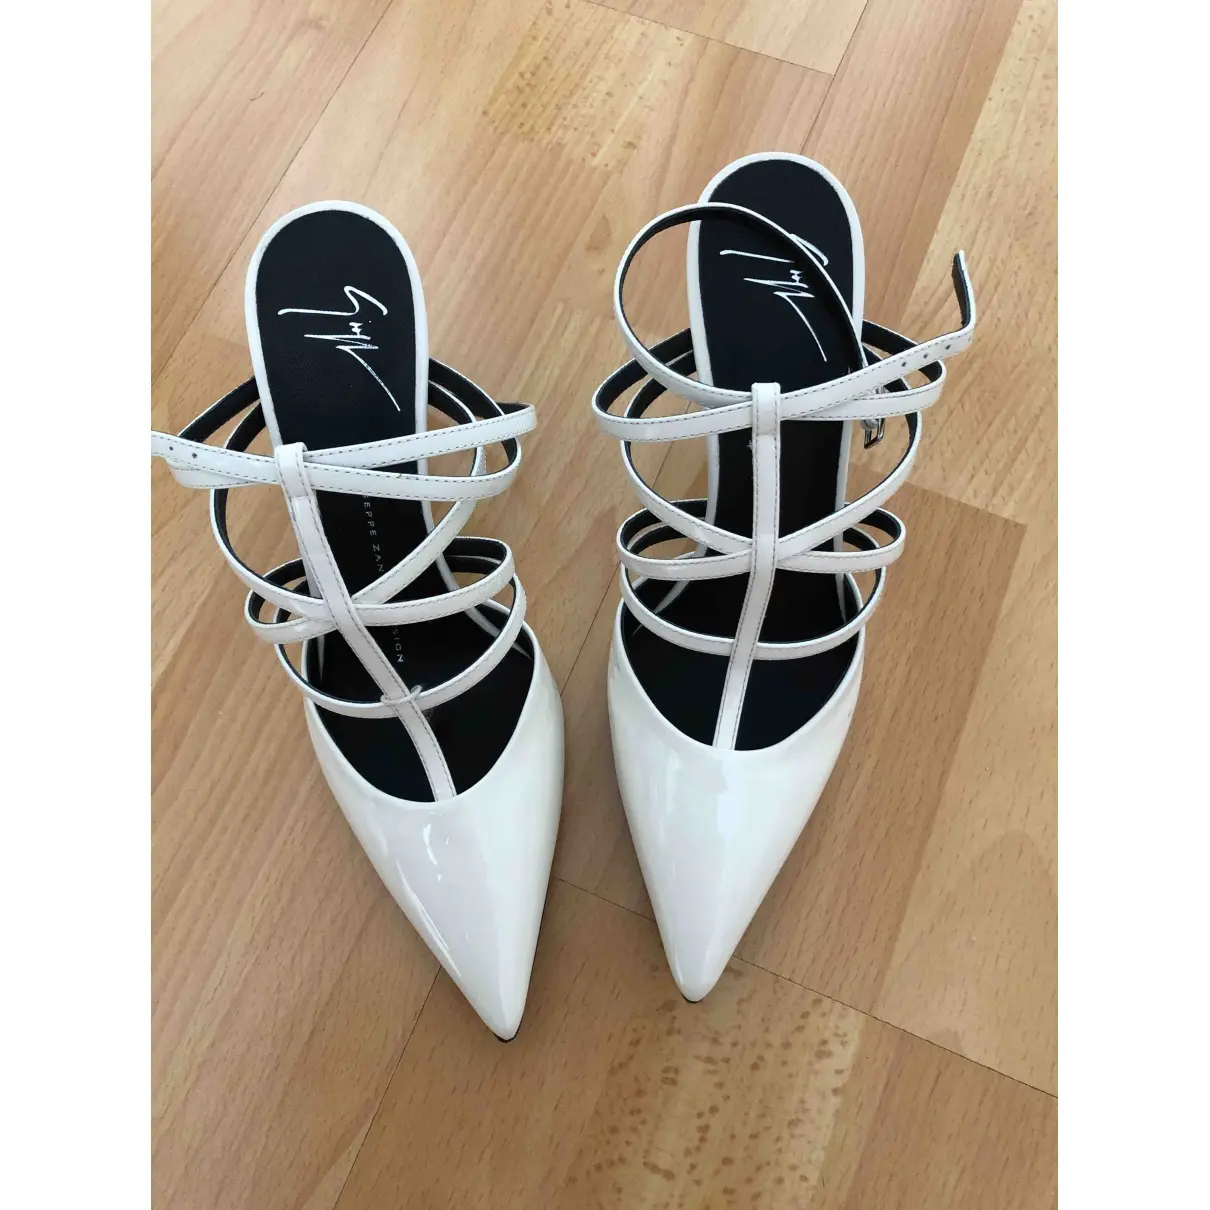 Giuseppe Zanotti Leather heels for sale